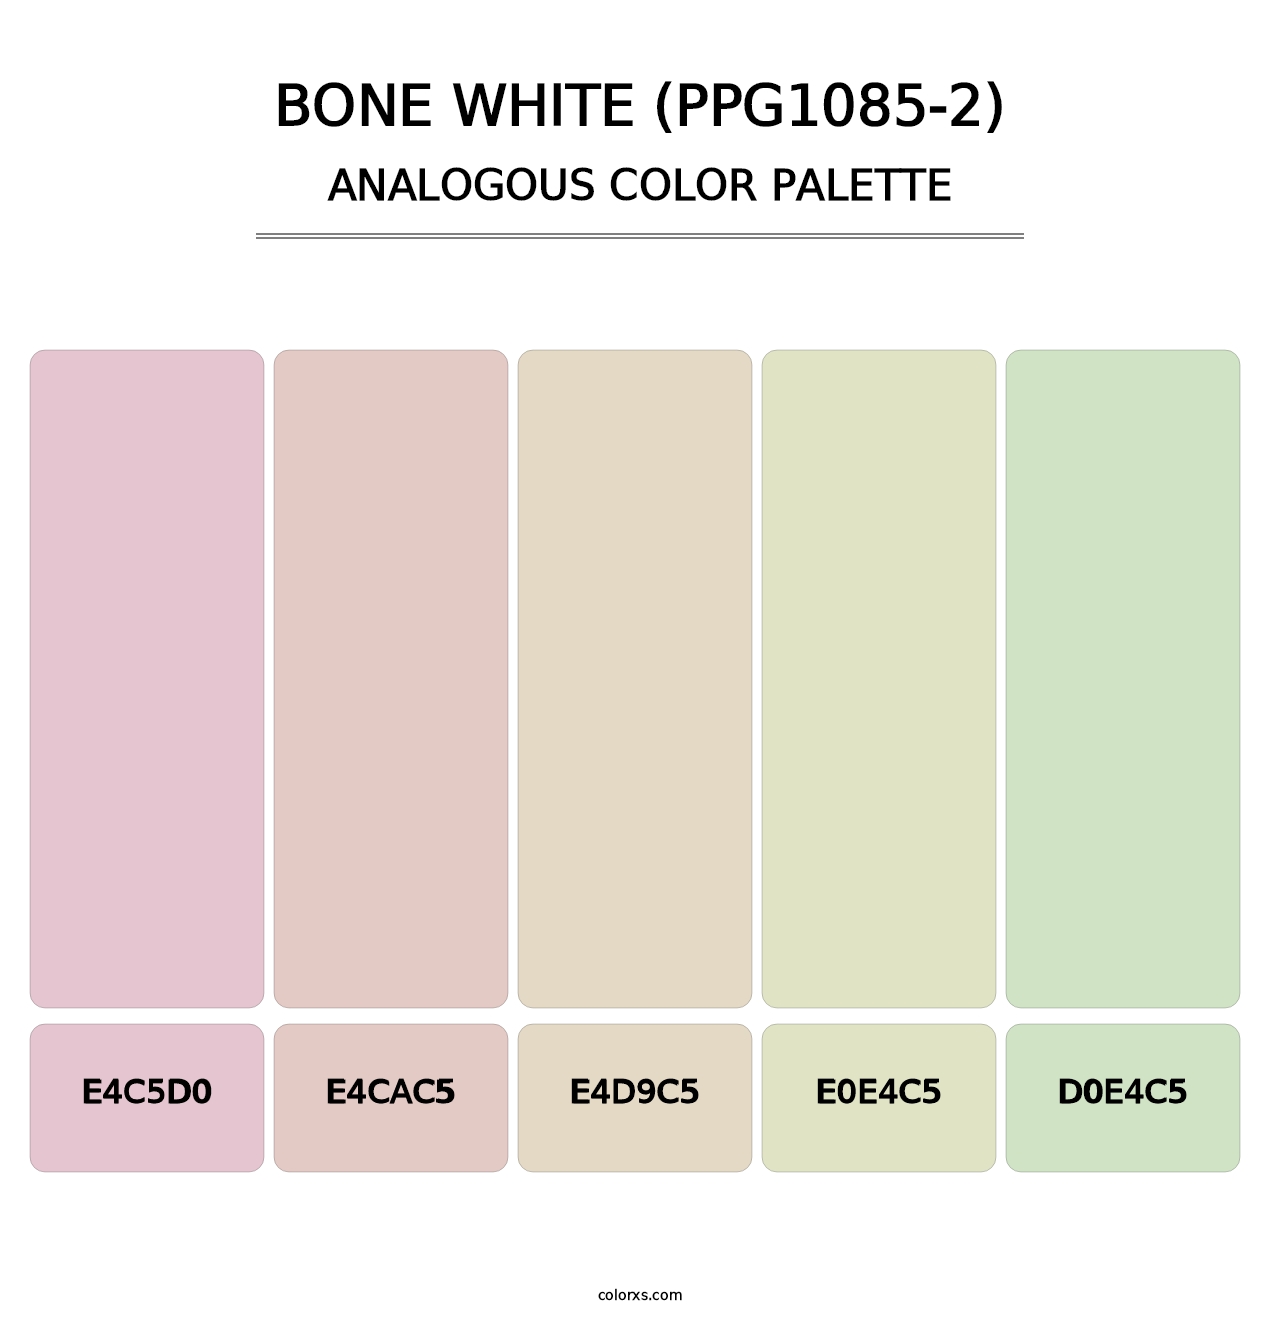 Bone White (PPG1085-2) - Analogous Color Palette